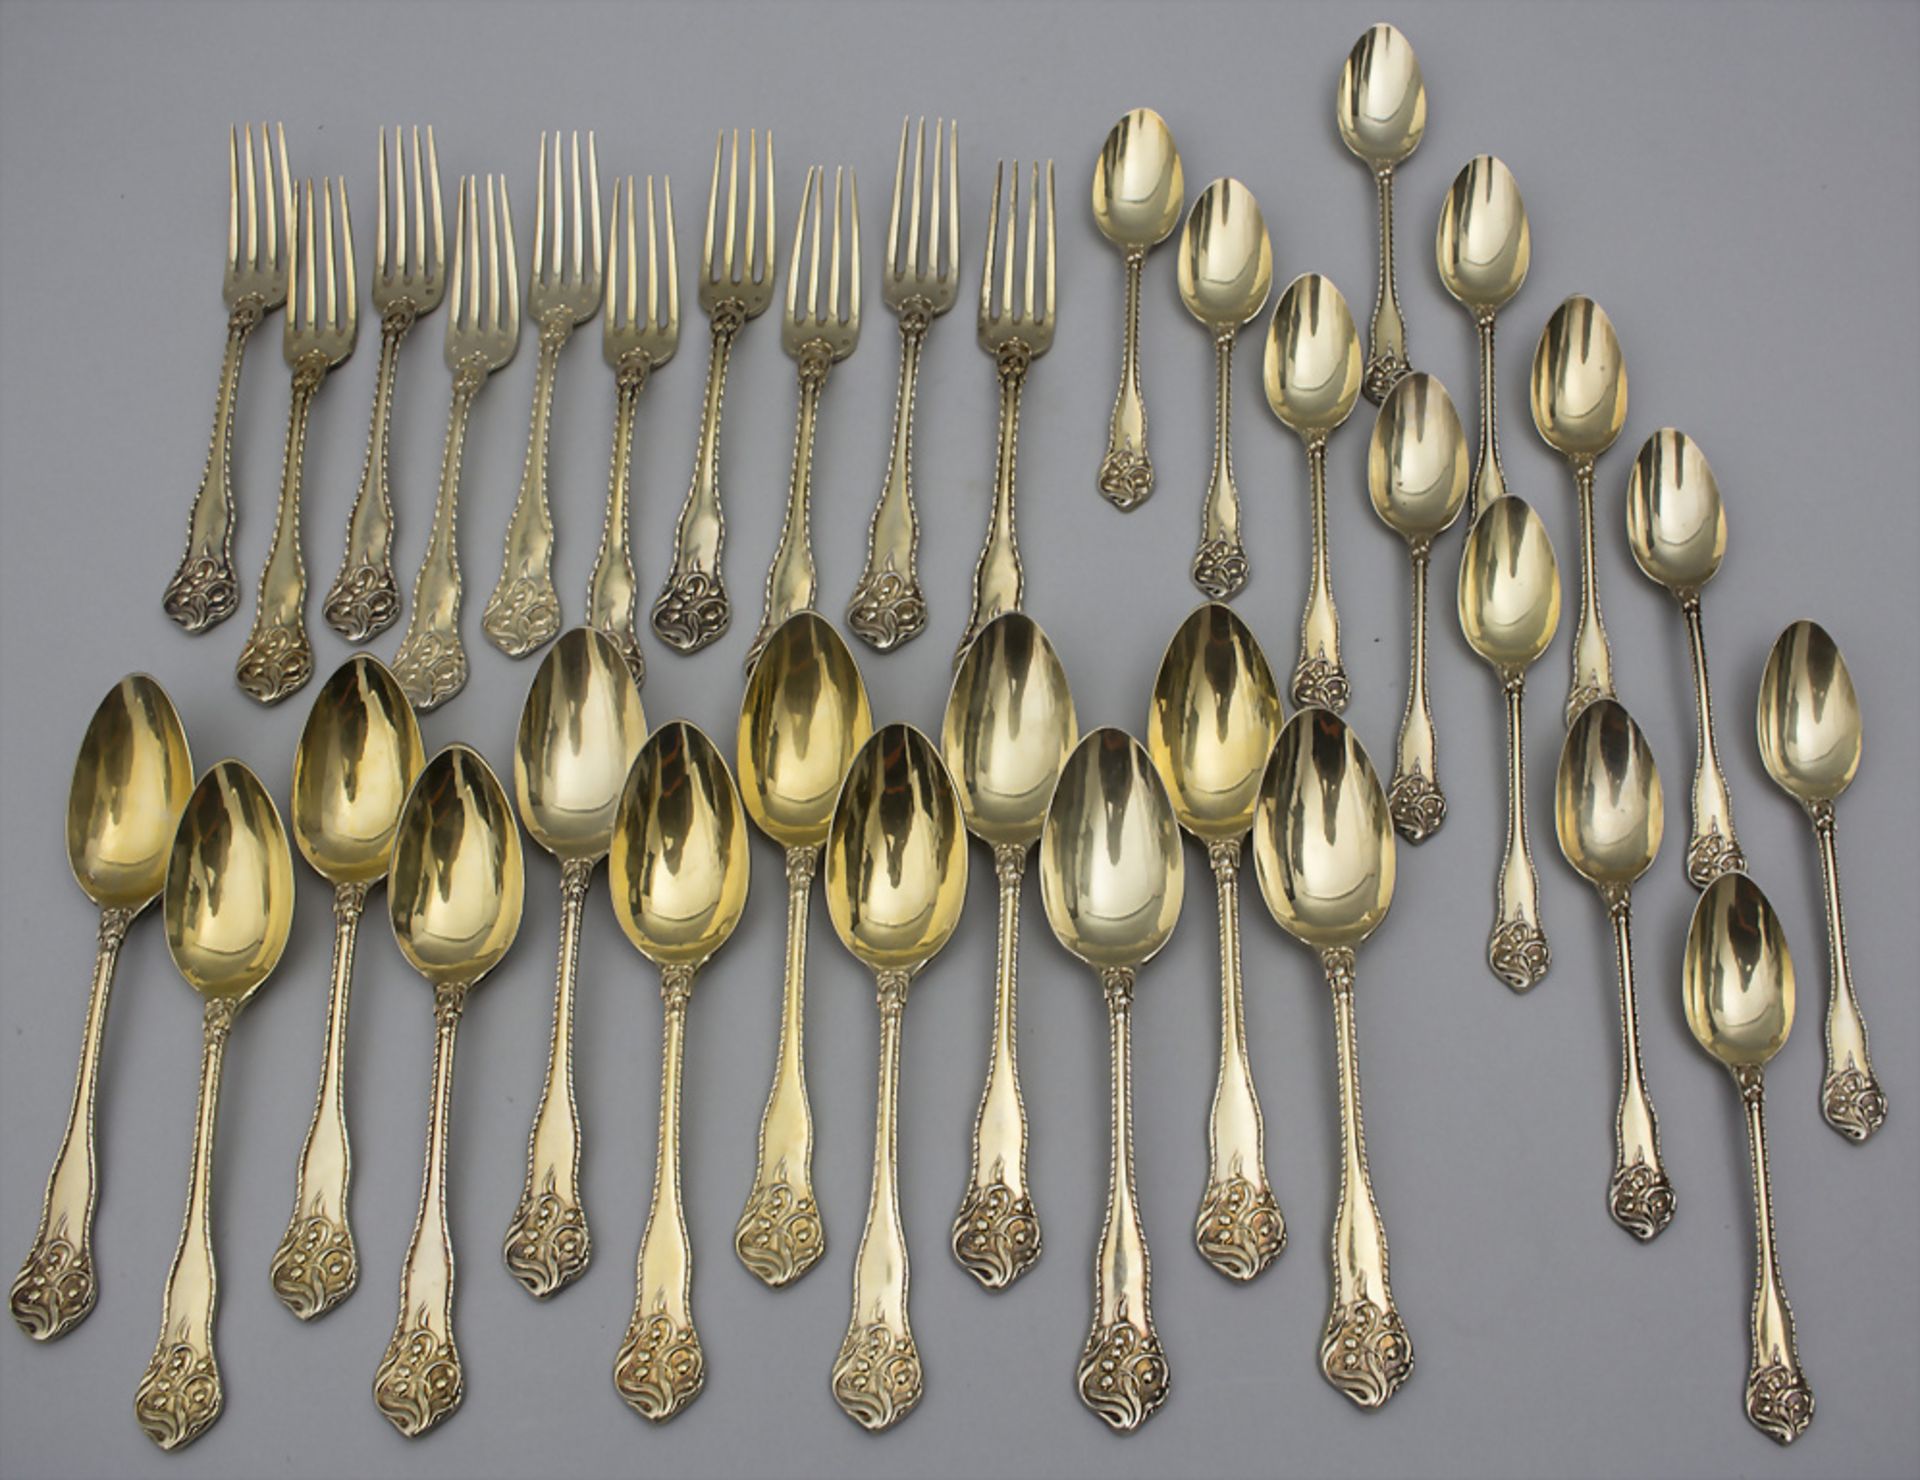 Jugendstil Silberbesteck für 12 Personen / 35 pieces of Art Nouveau silver cutlery, Paris, um 1900